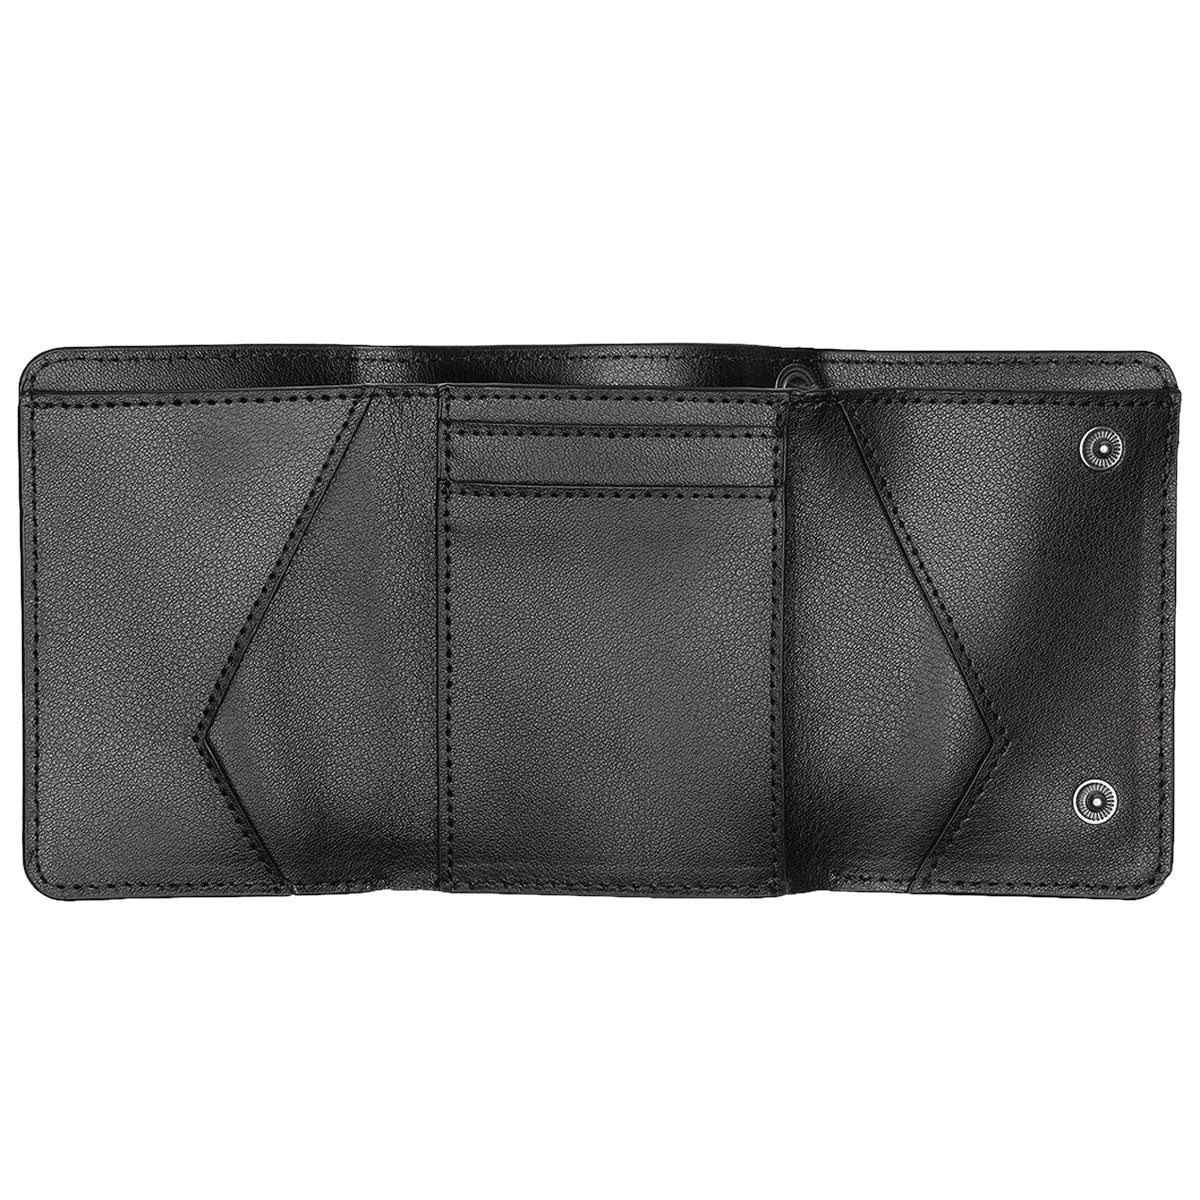 Volcom Pistol Leather Wallet - Black image 3